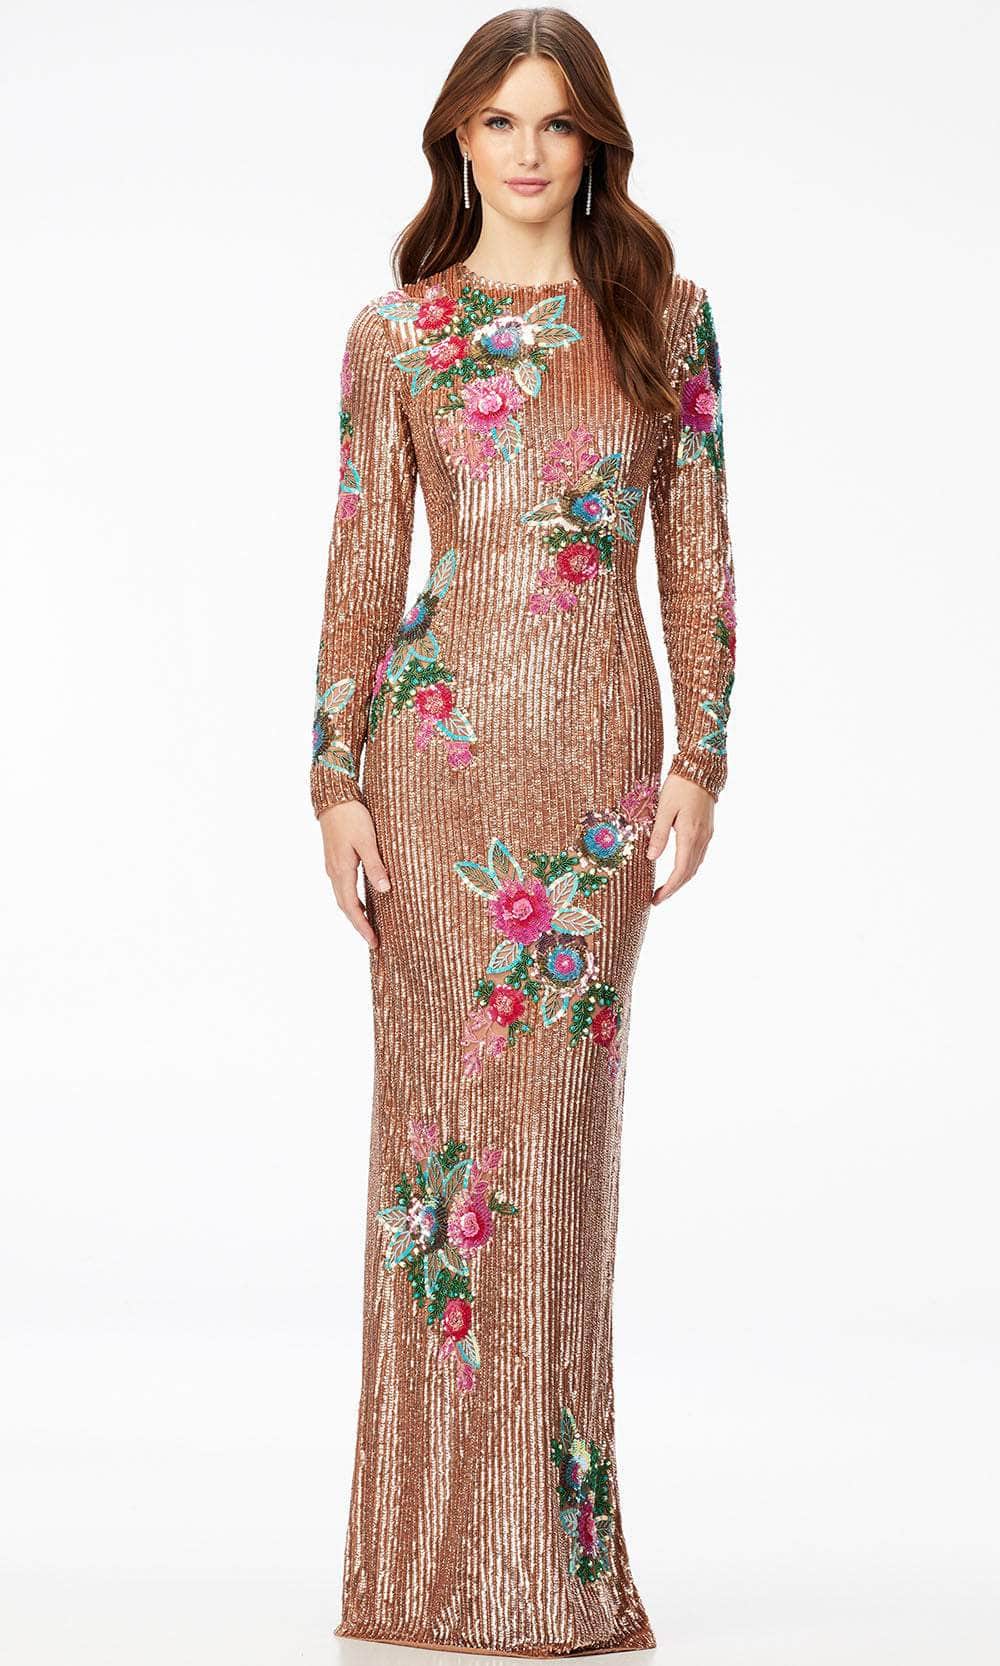 Ashley Lauren 11203 - Beaded Floral Evening Dress
